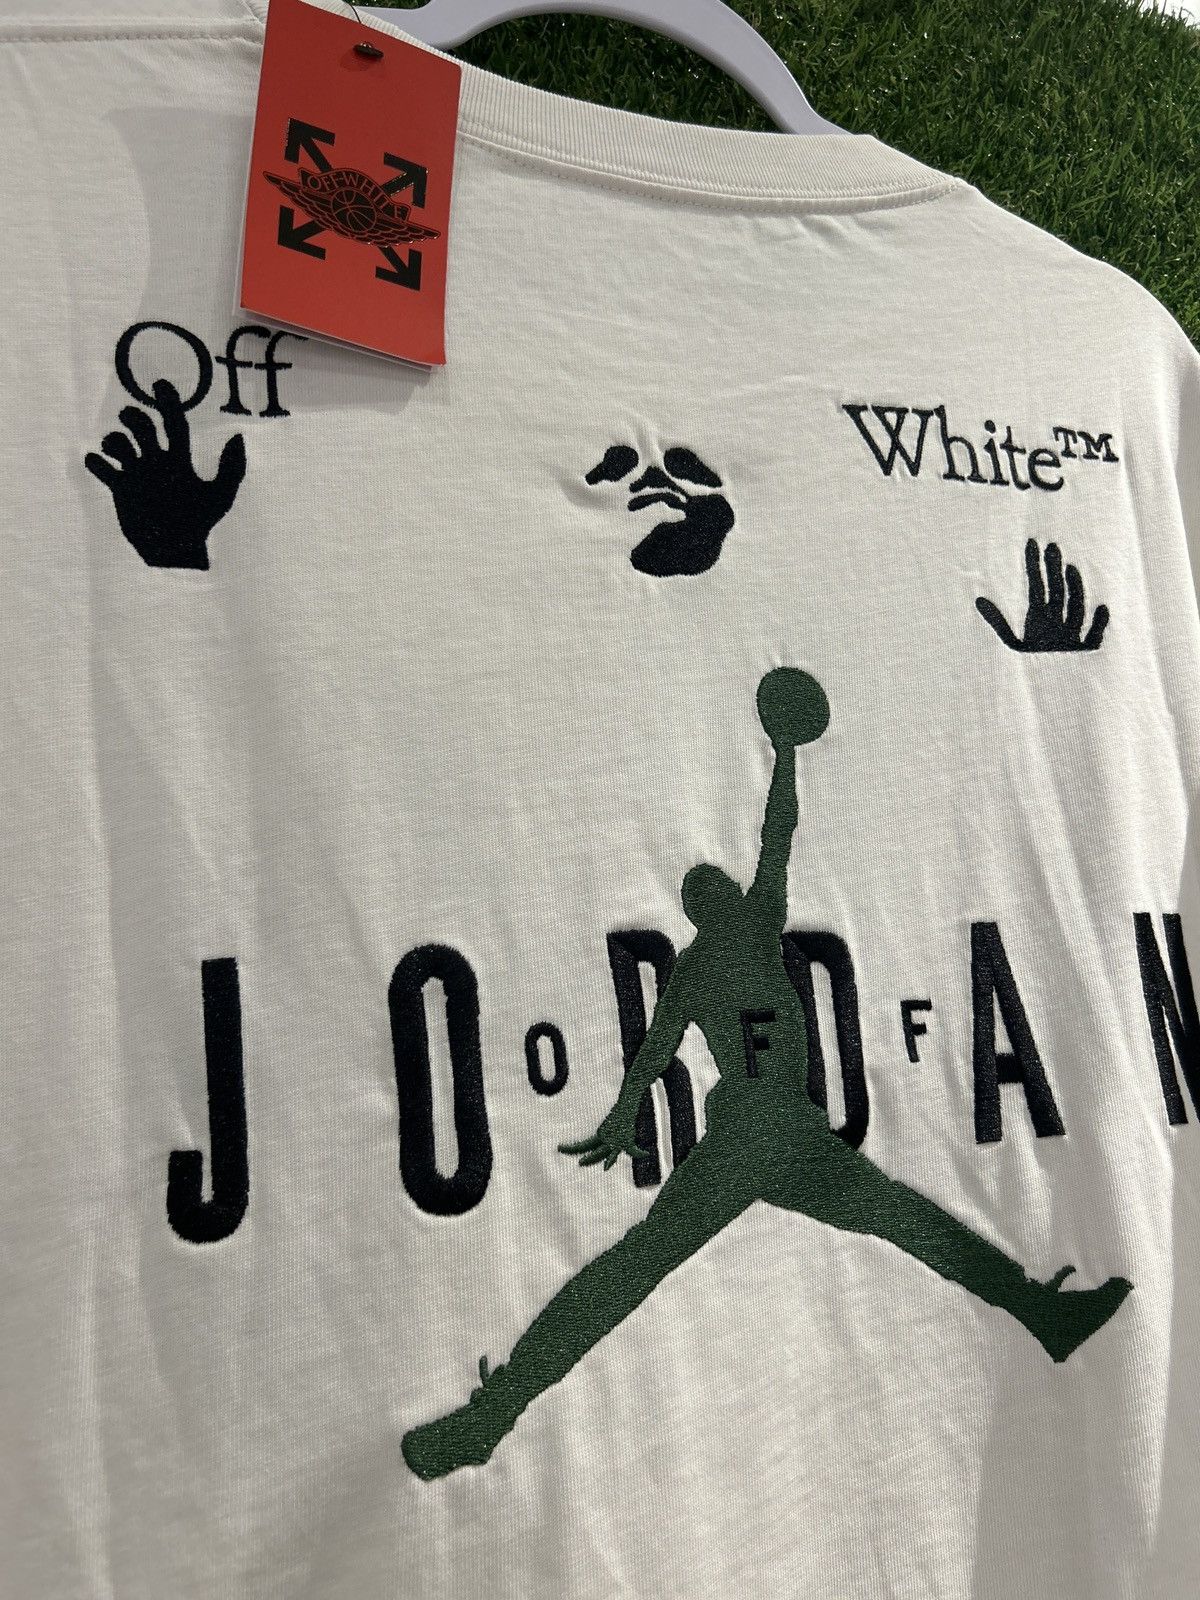 Jordan Brand Off-white x Jordan 3XL T-shirt | Grailed